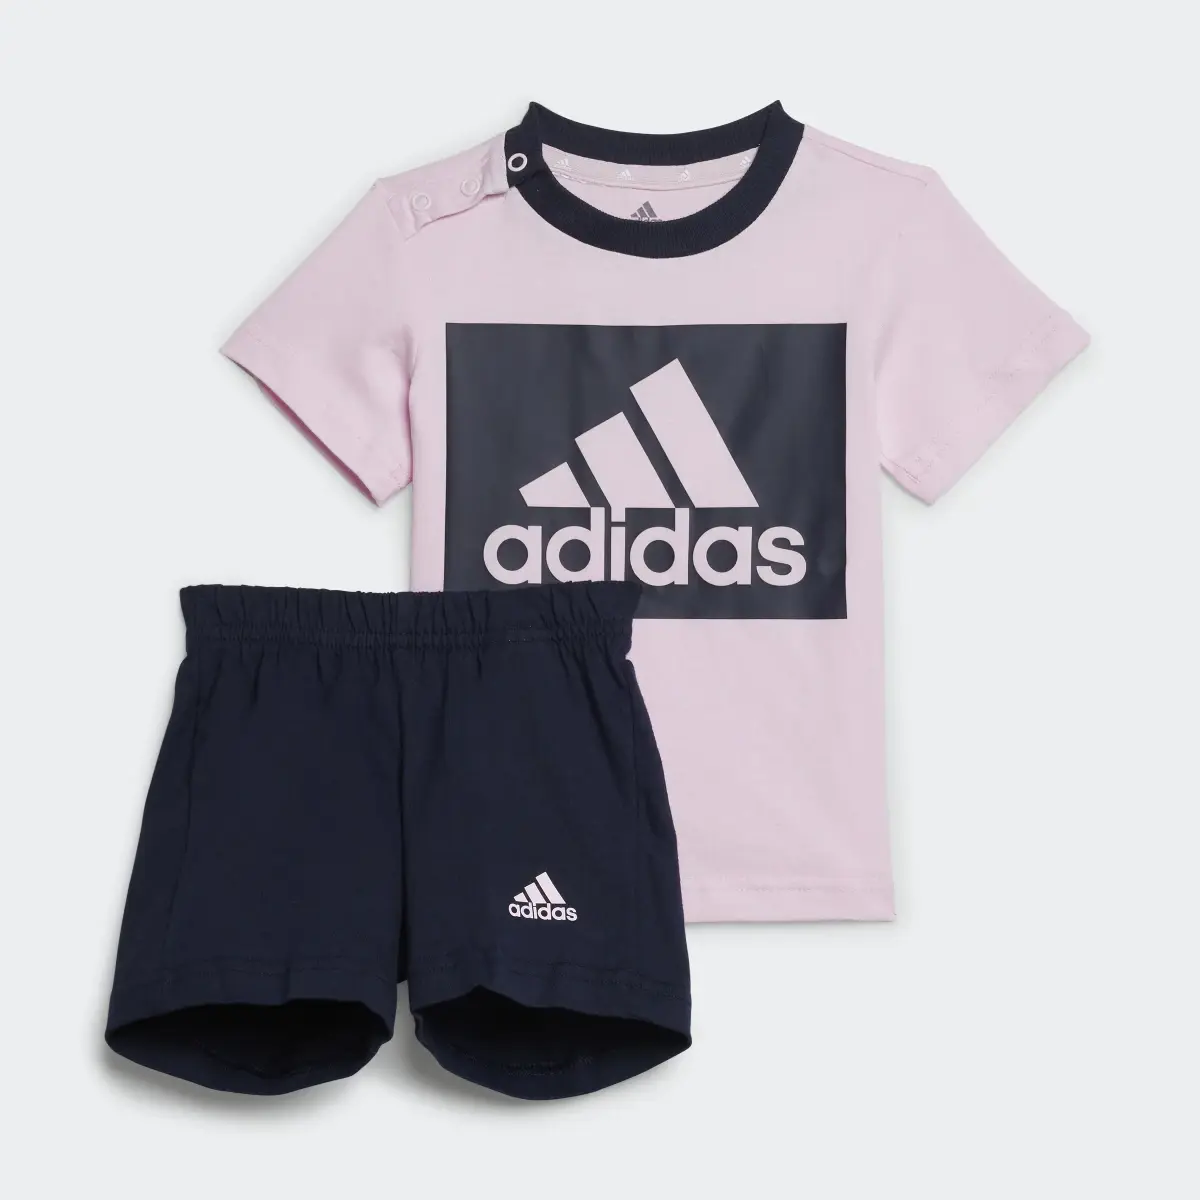 Adidas Essentials Tee and Shorts Set. 2